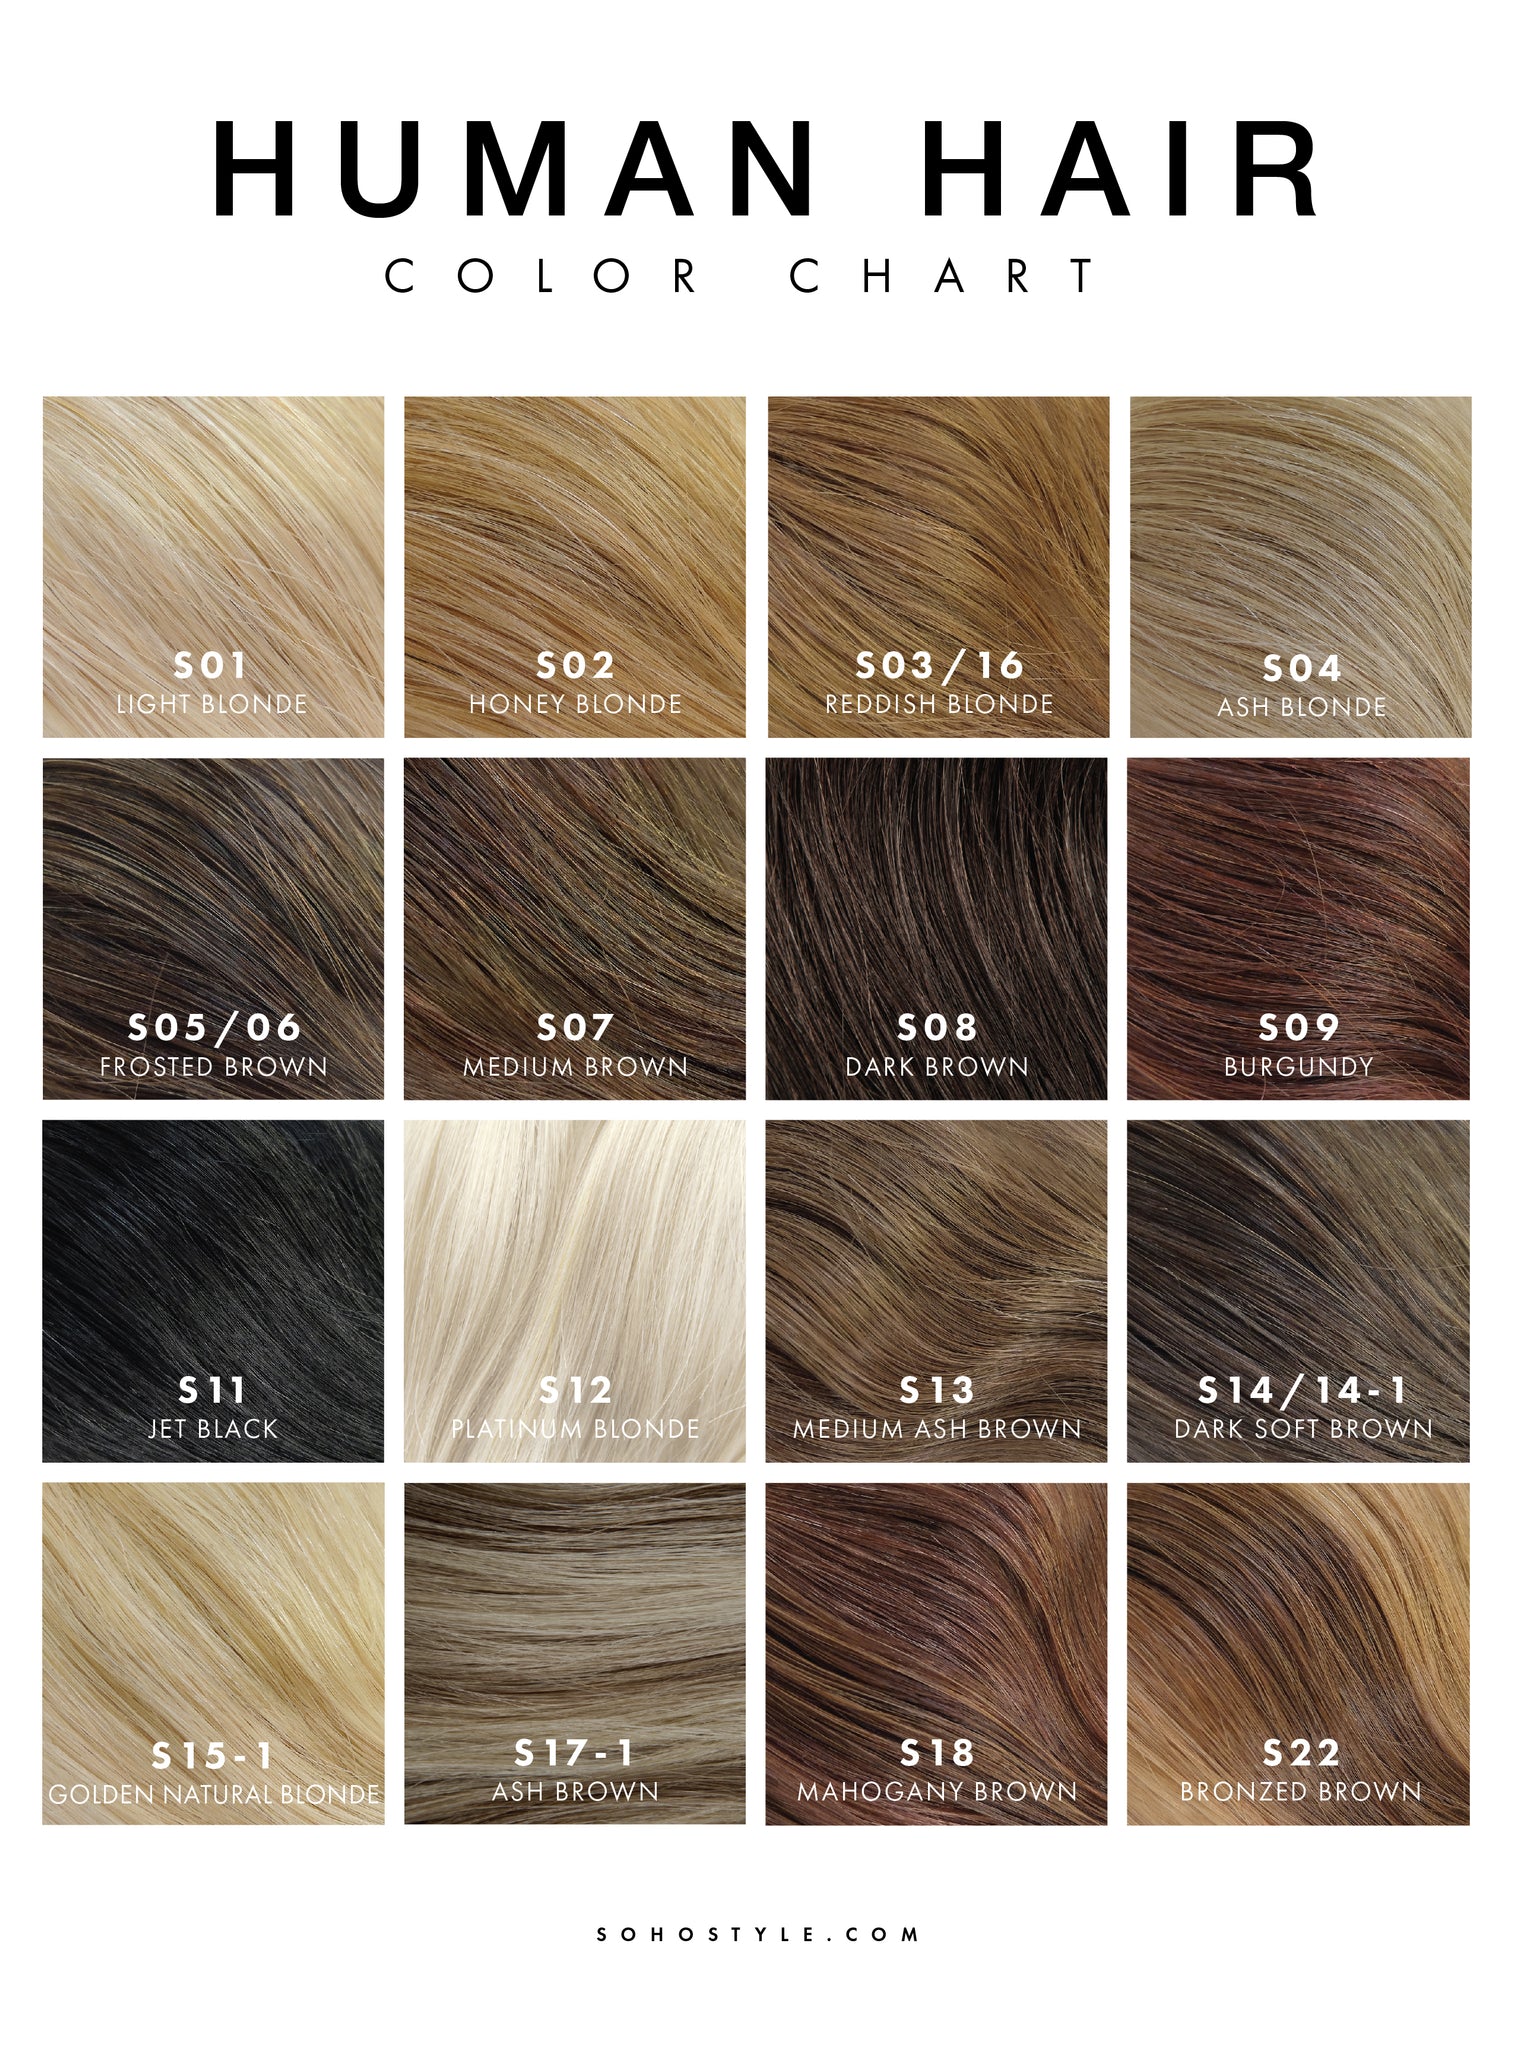 Loreal Hair Dye Color Chart